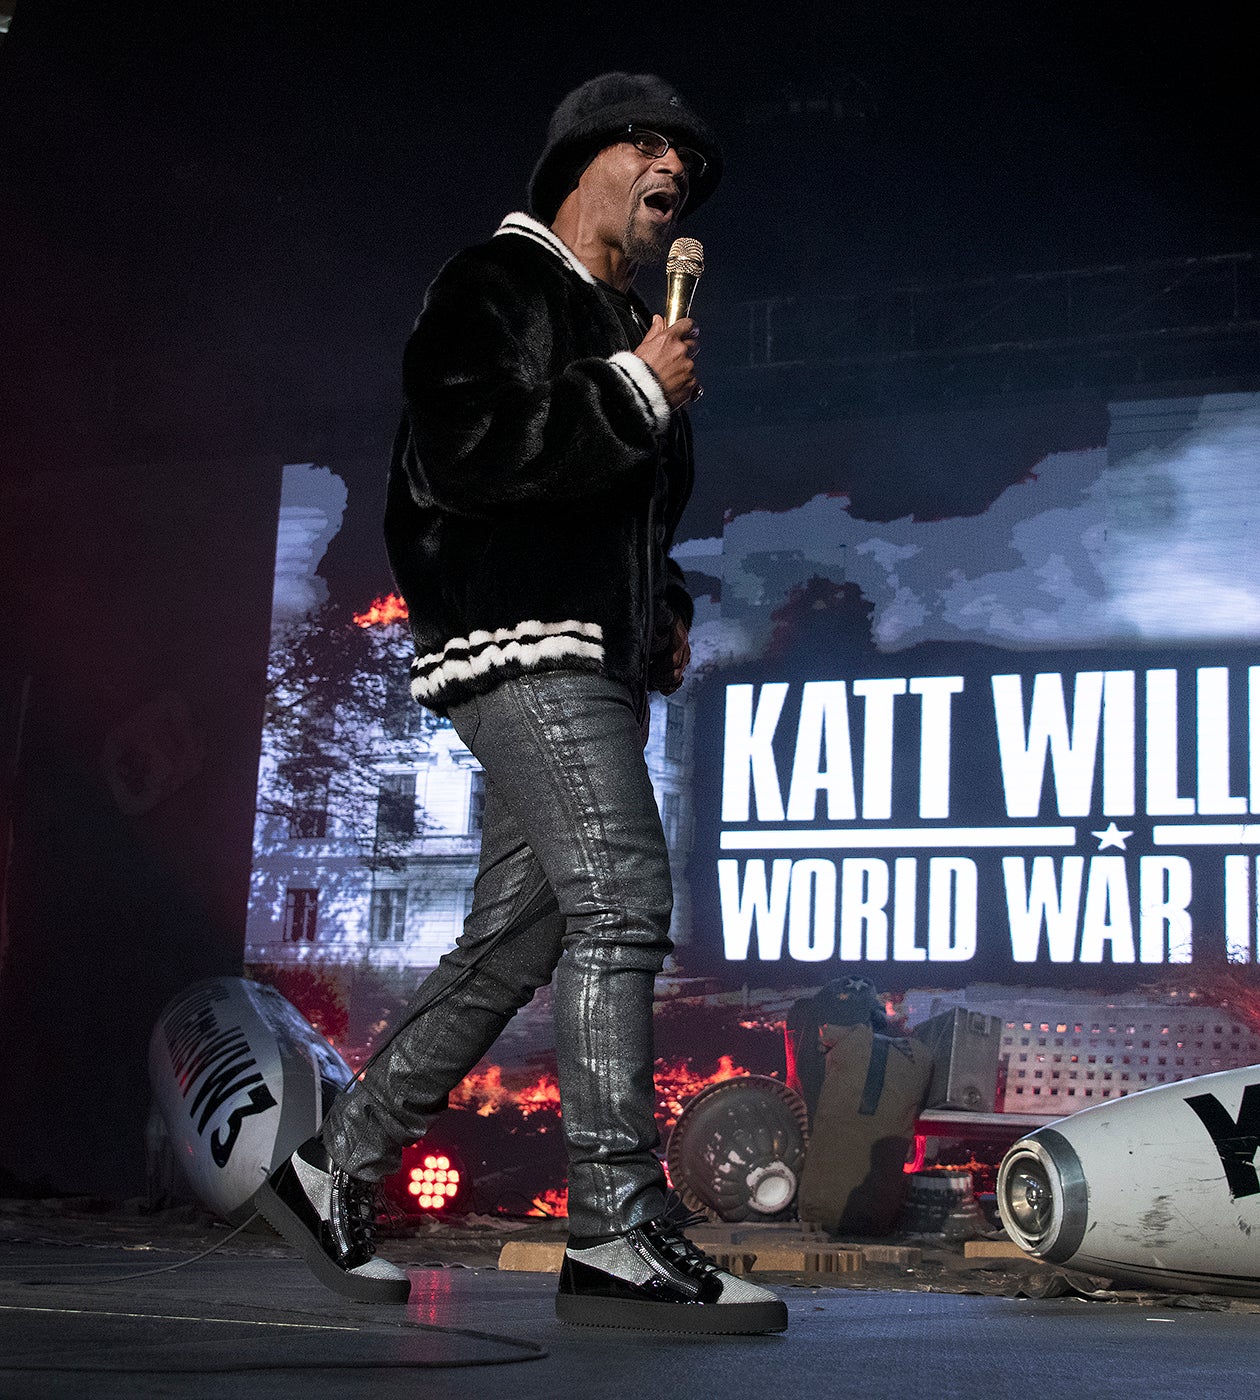 katt williams ww3 tour opening act